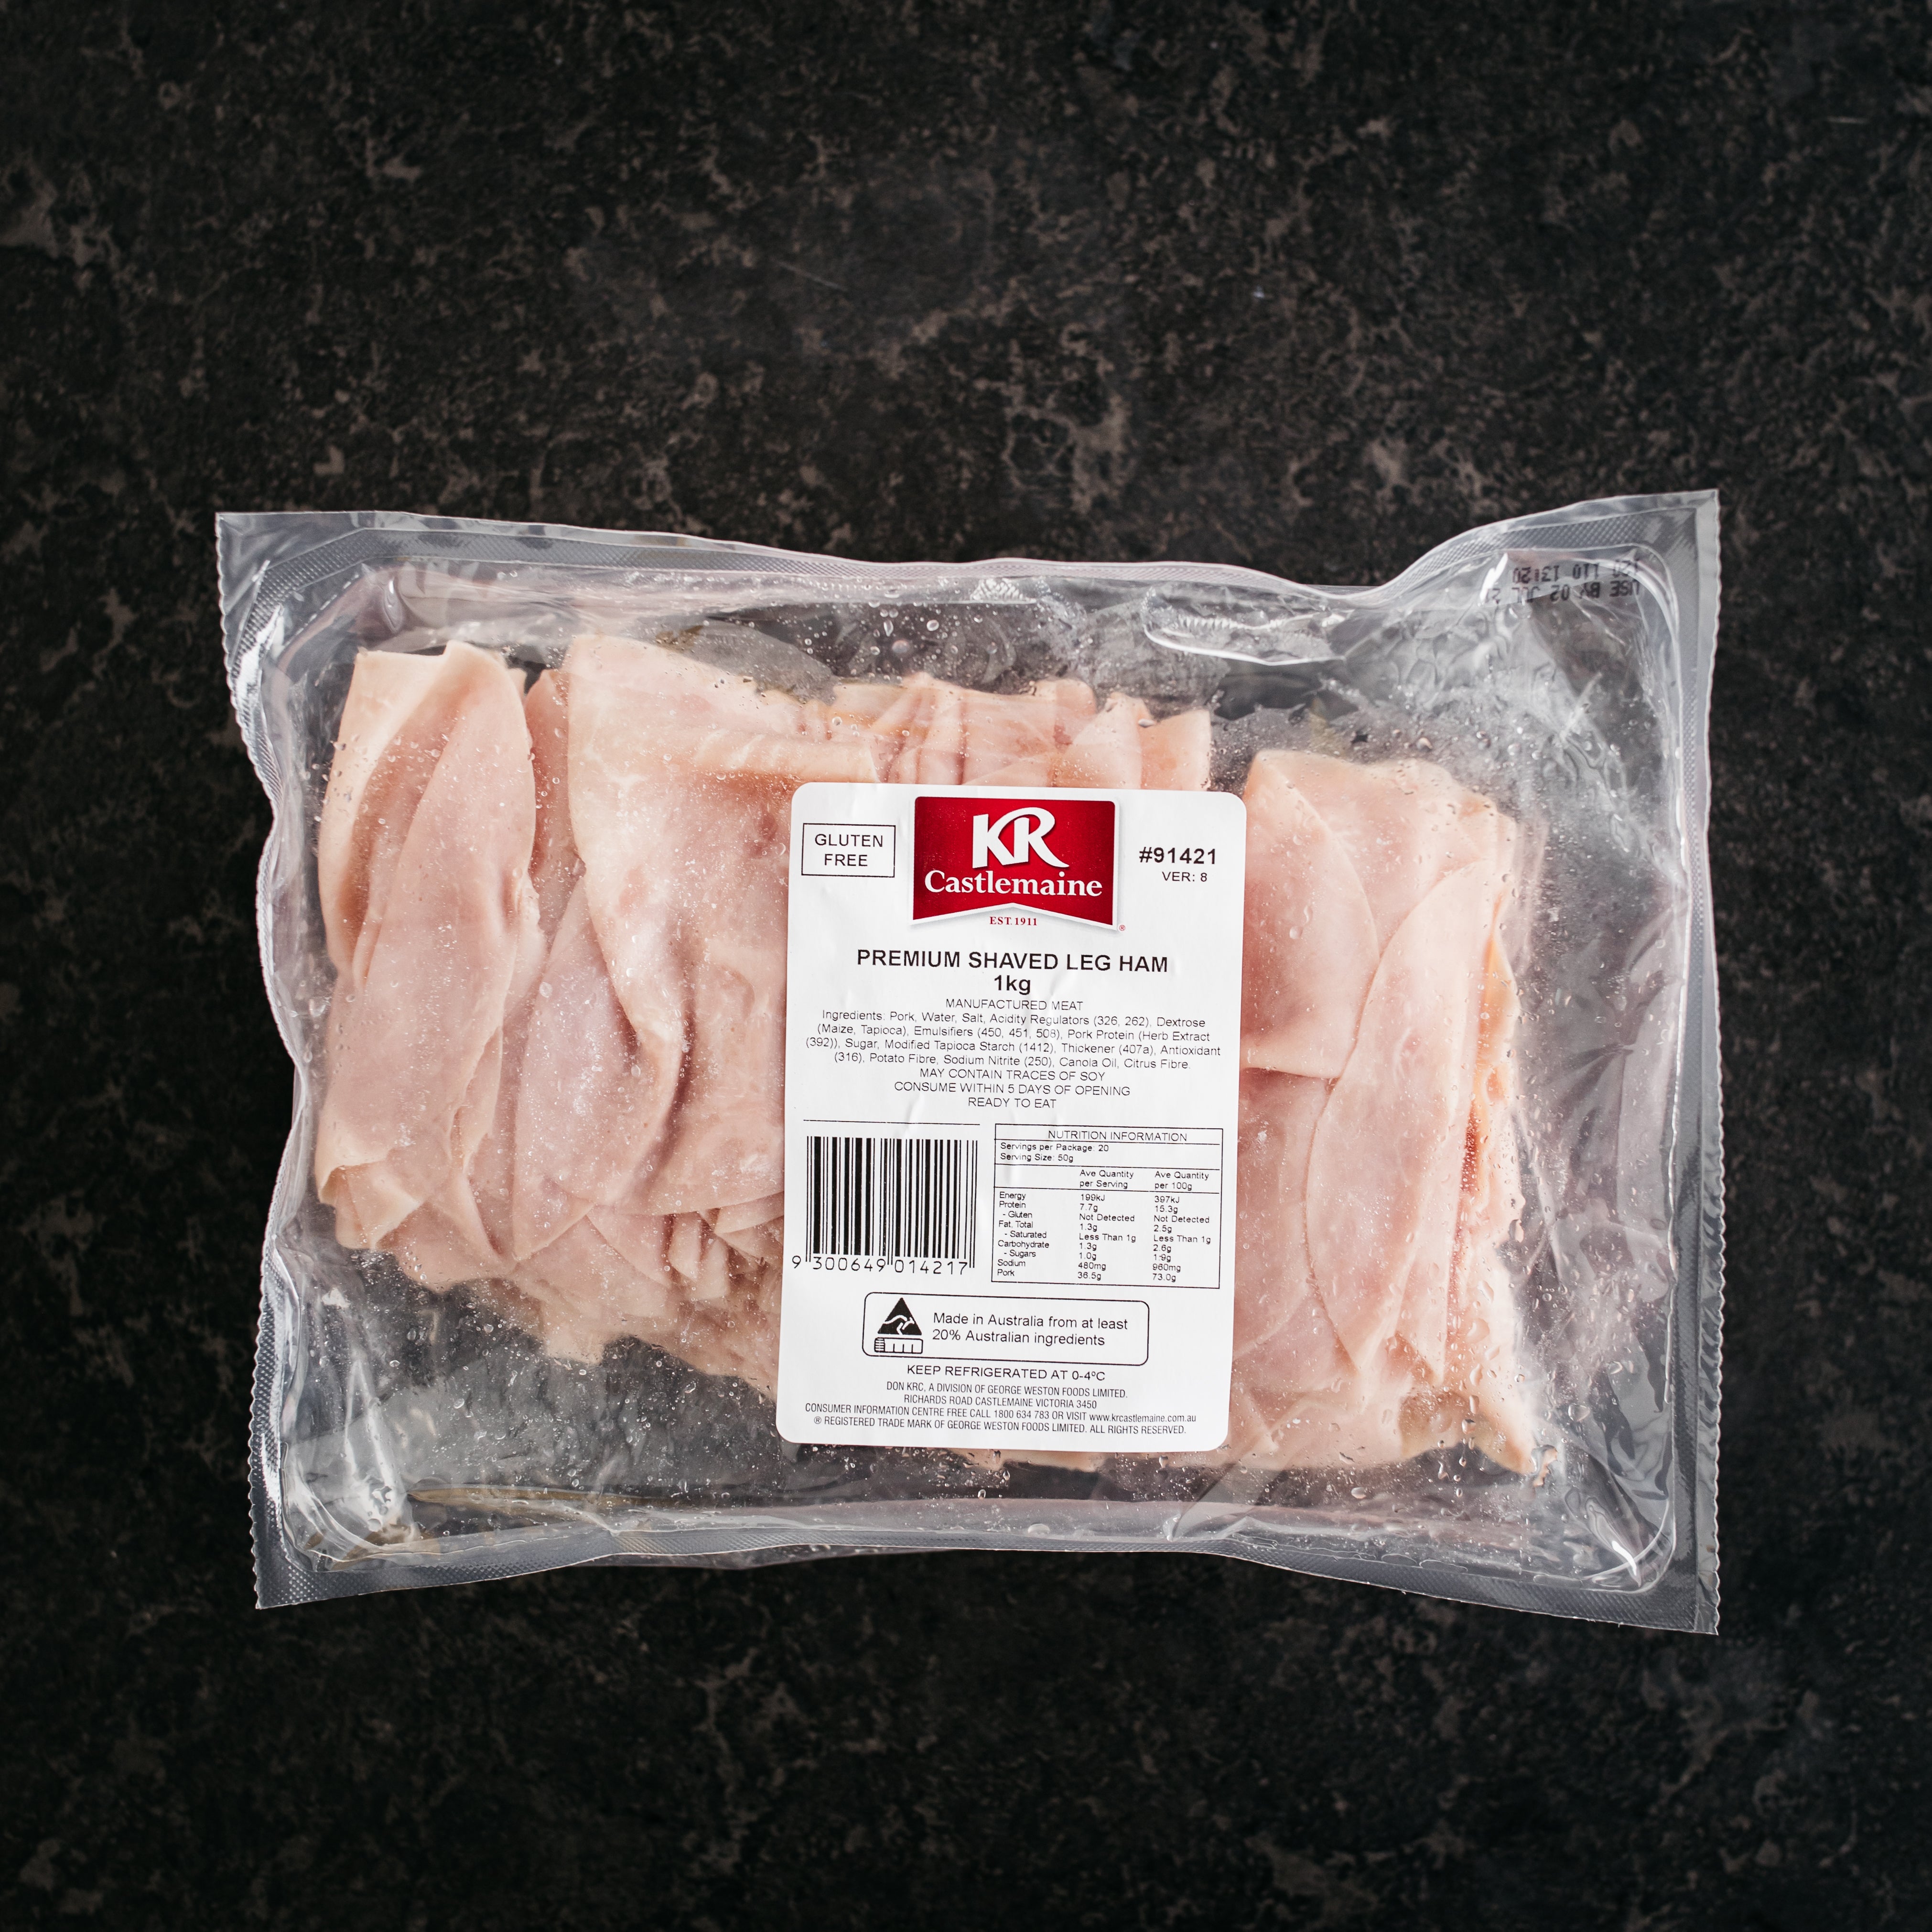 Premium Shaved Leg Ham 1kg Kr Castlemaine Alpha Fresh 